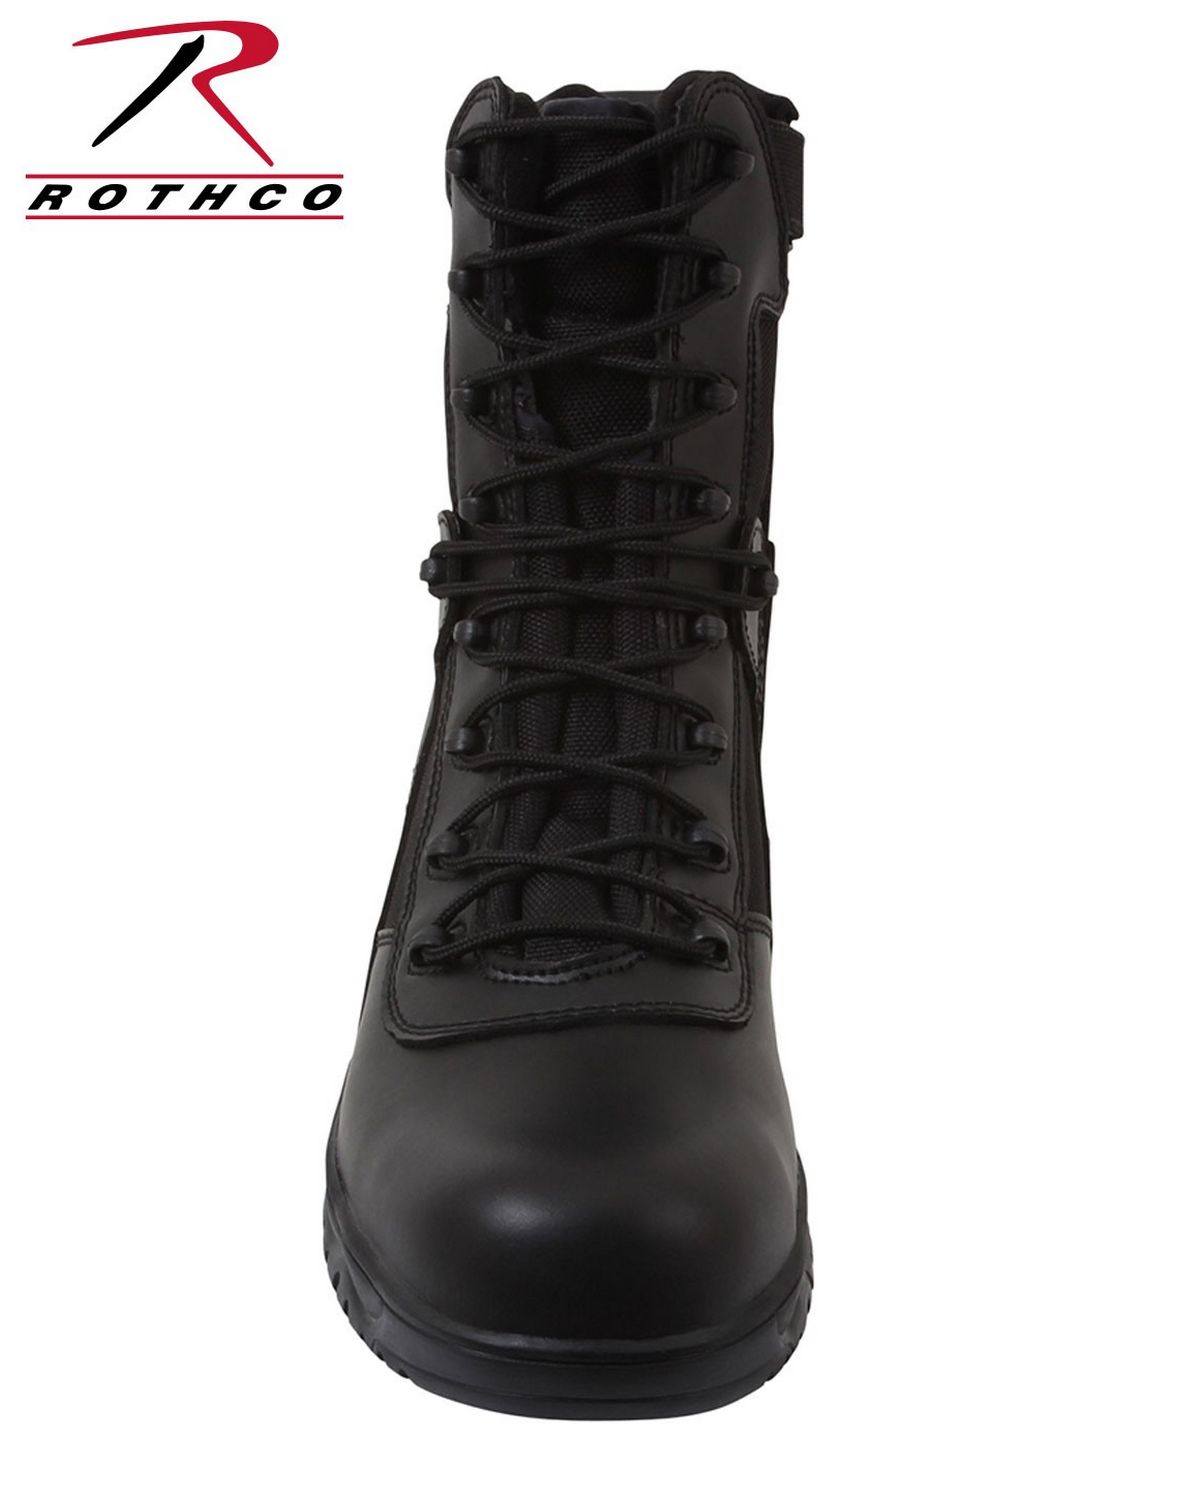 rothco steel toe boots